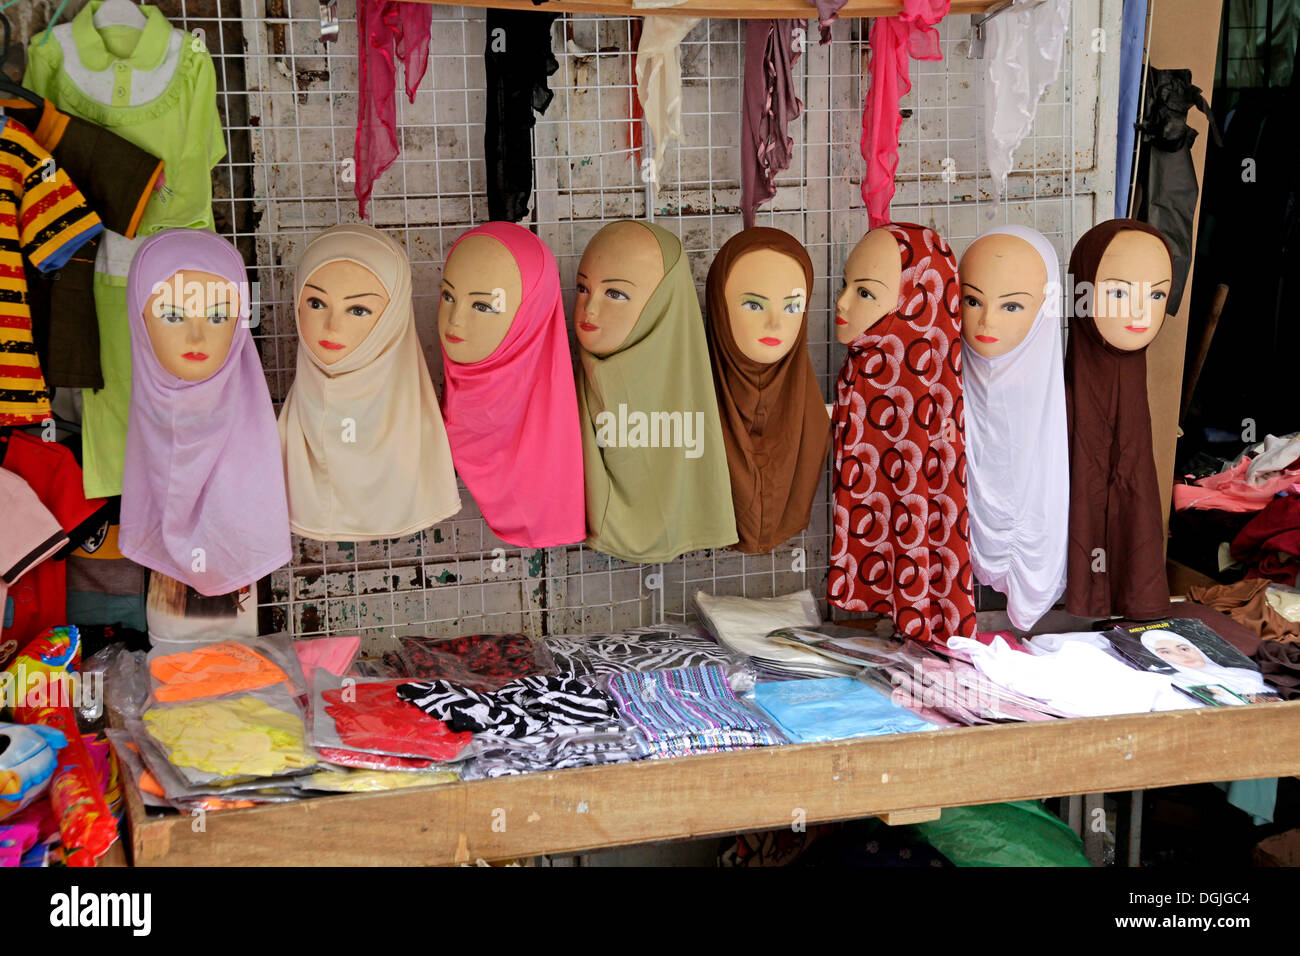 Merchandise display, Muslim women's clothing, headgear, Jerusalem, Yerushalayim, Israel, Middle East Stock Photo